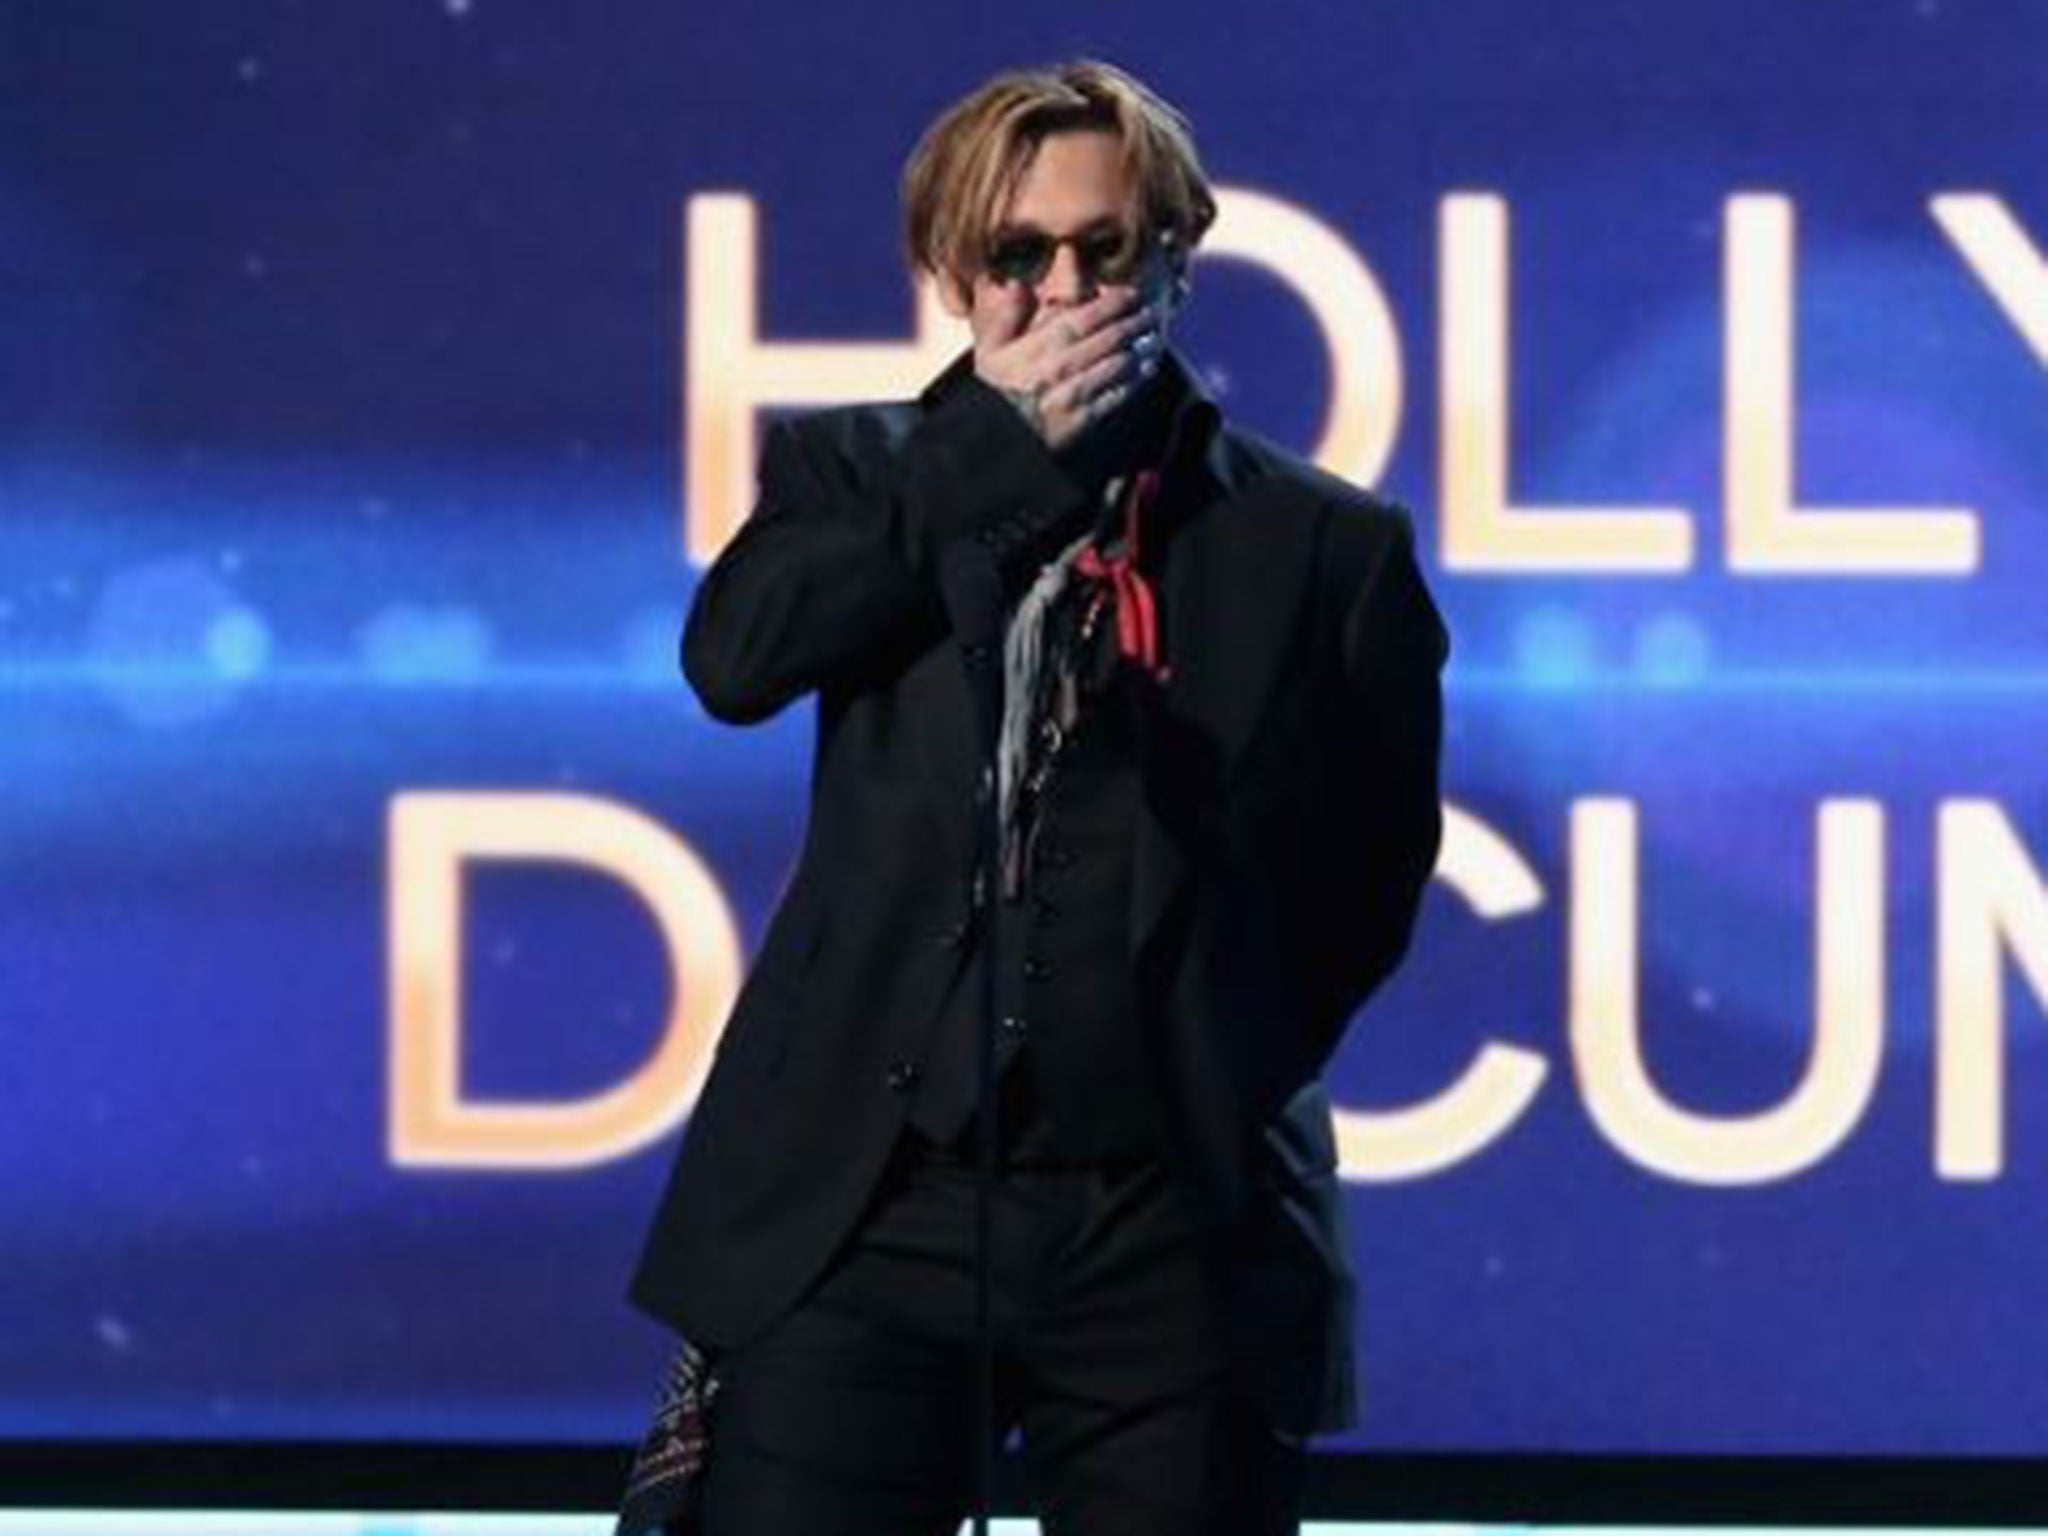 Johnny Depp at the 2014 Hollywood Film Awards